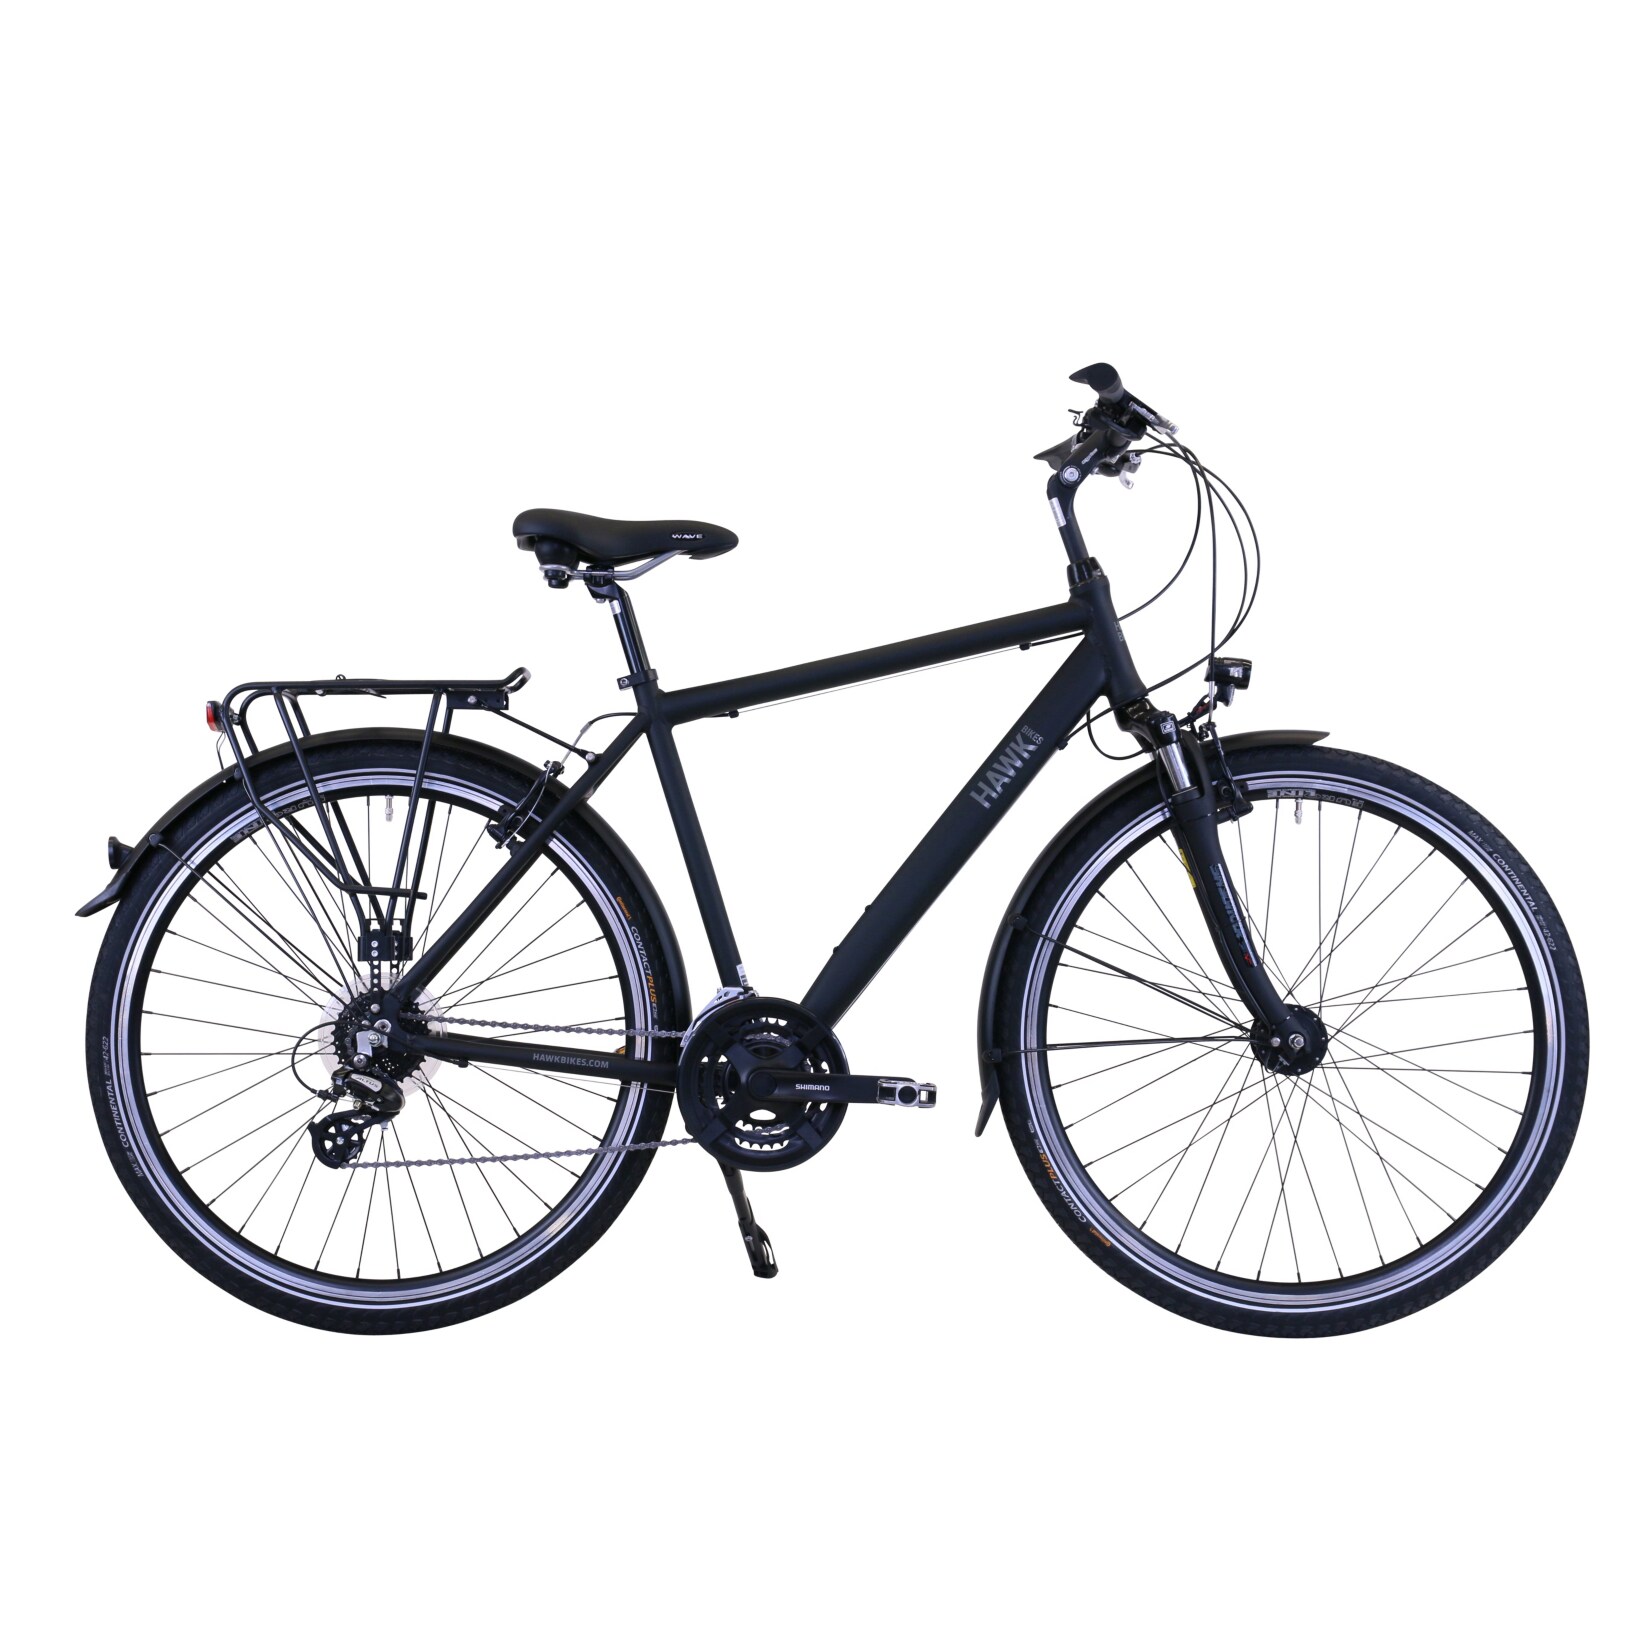 HAWK Trekking Premium Fahrrad, Black Herren 28 Zoll, Rahmenhöhe 52cm, Fahrrad mit Microshift 24 Gang Kettenschaltung & B